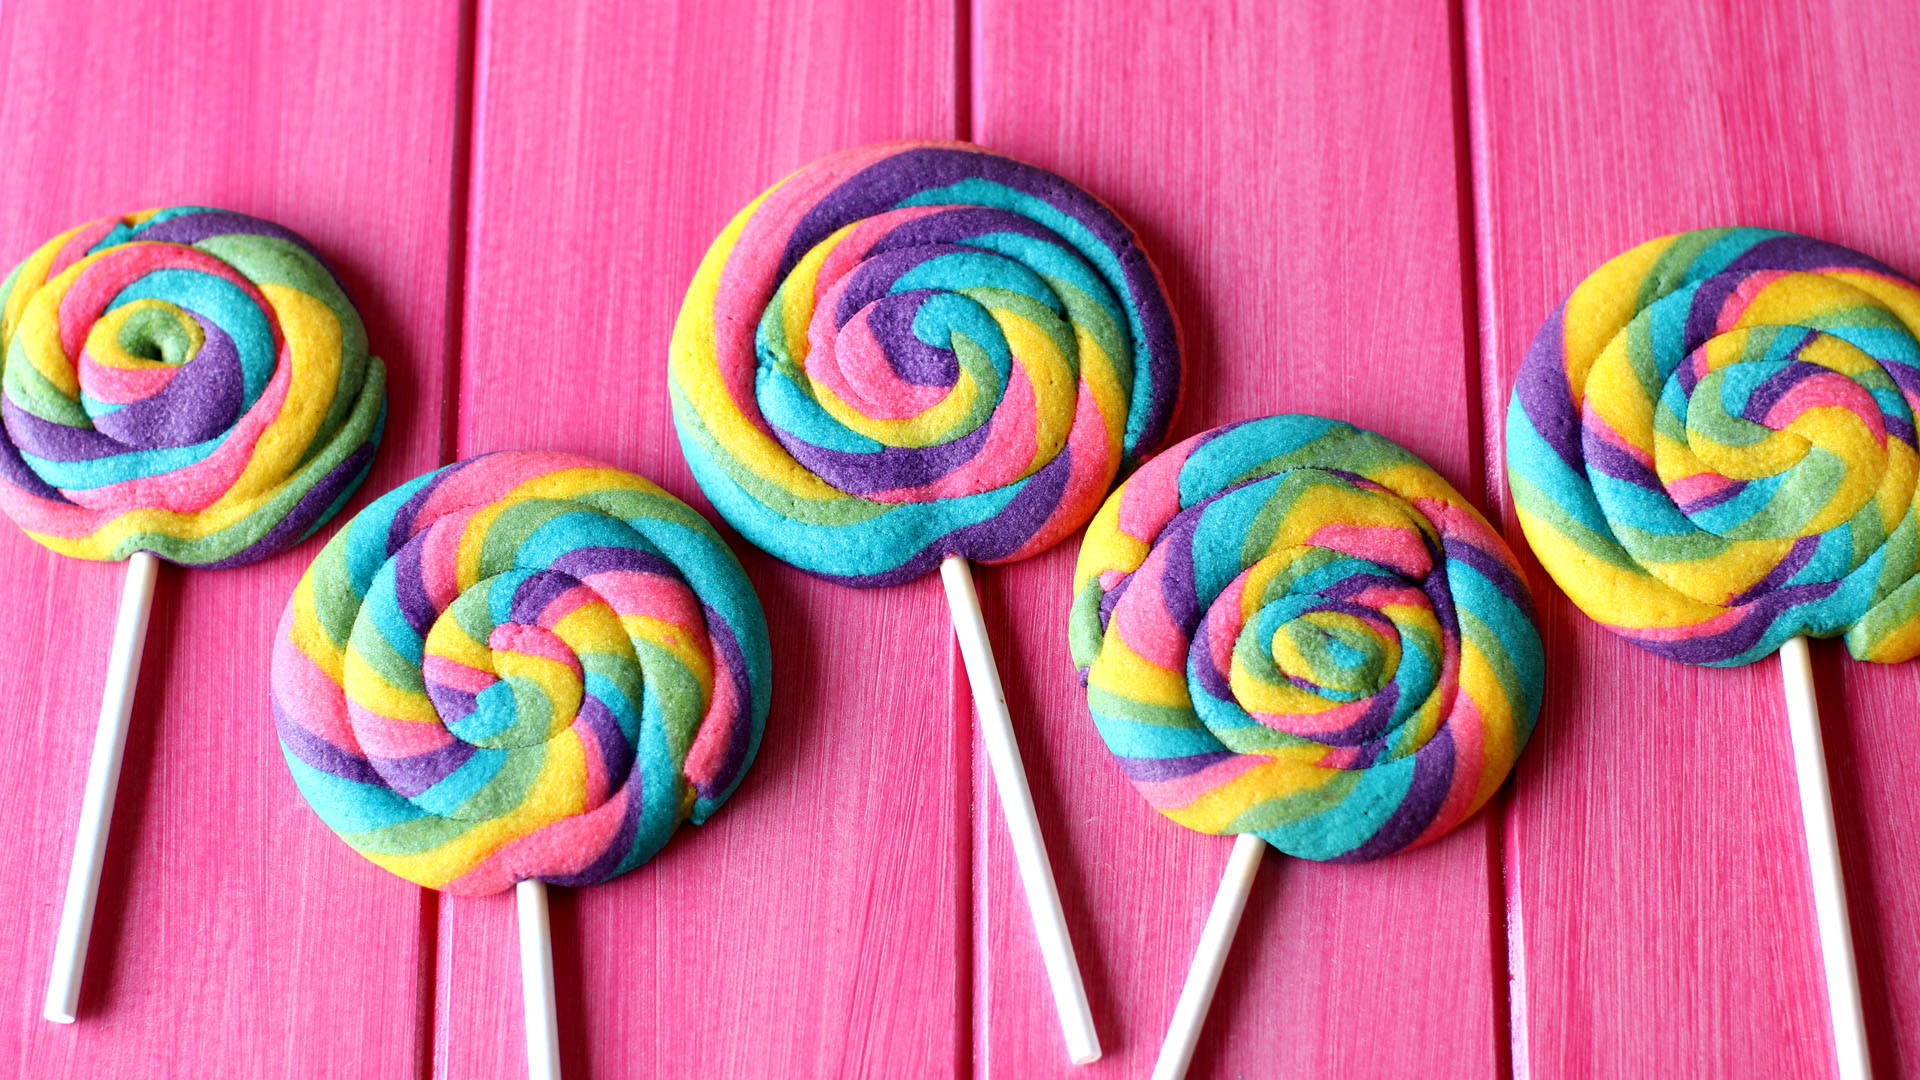 Lollipop wallpaper, Sweet indulgence, Colorful delight, Sugary treat, 1920x1080 Full HD Desktop